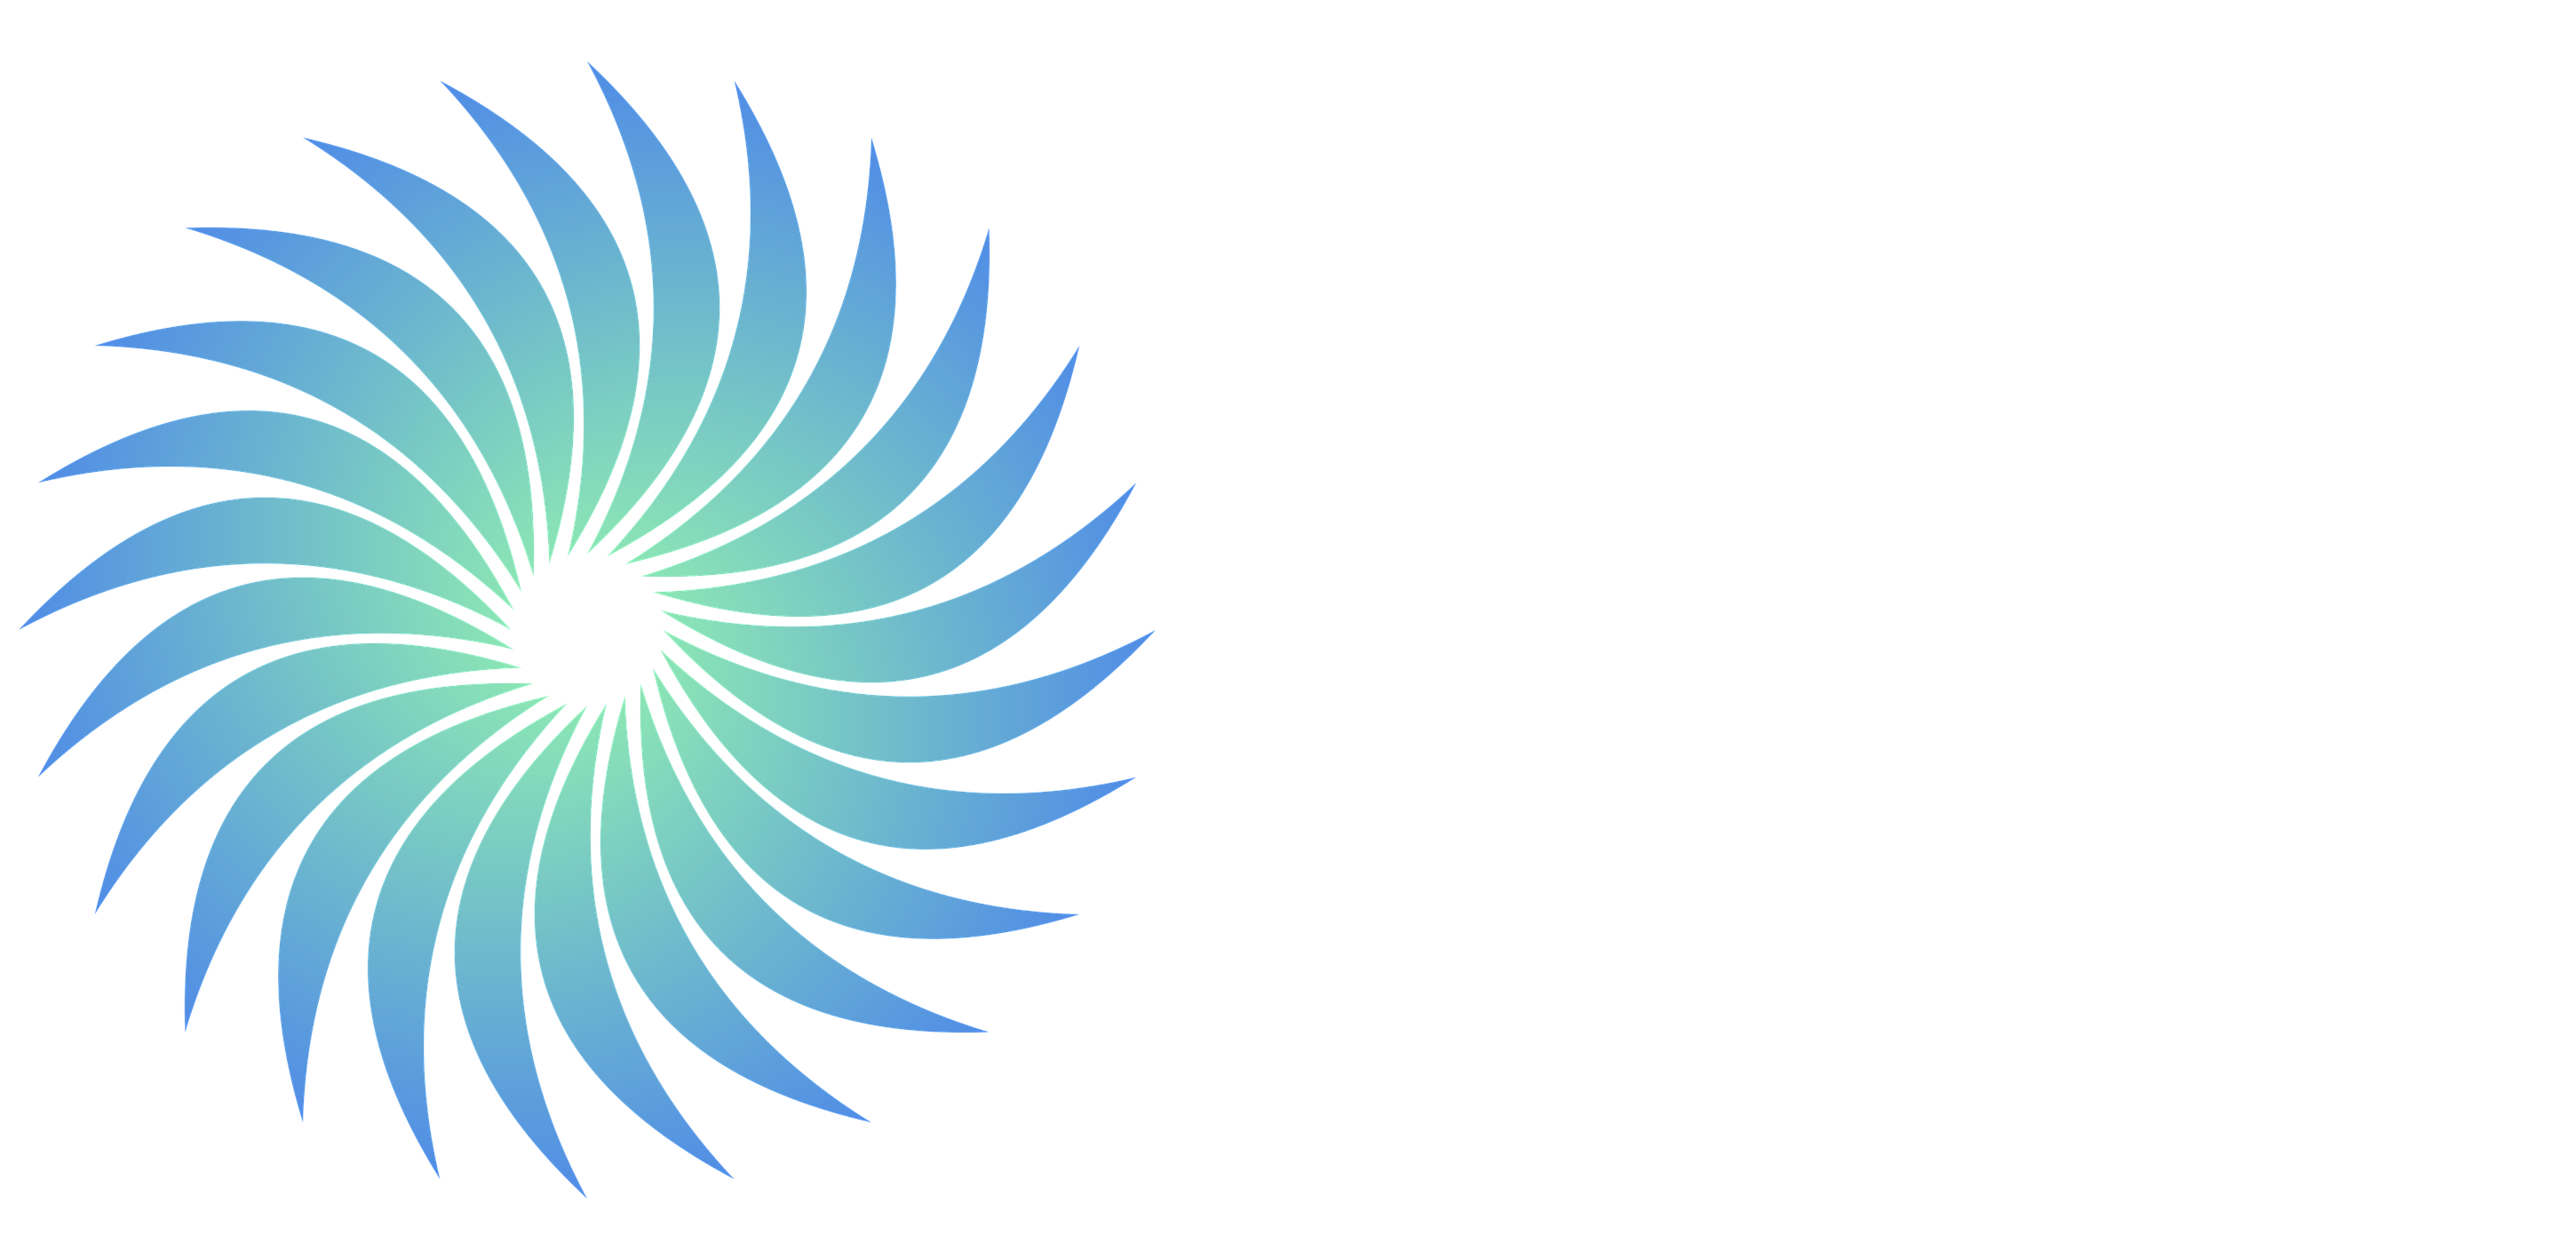 Computerhealth